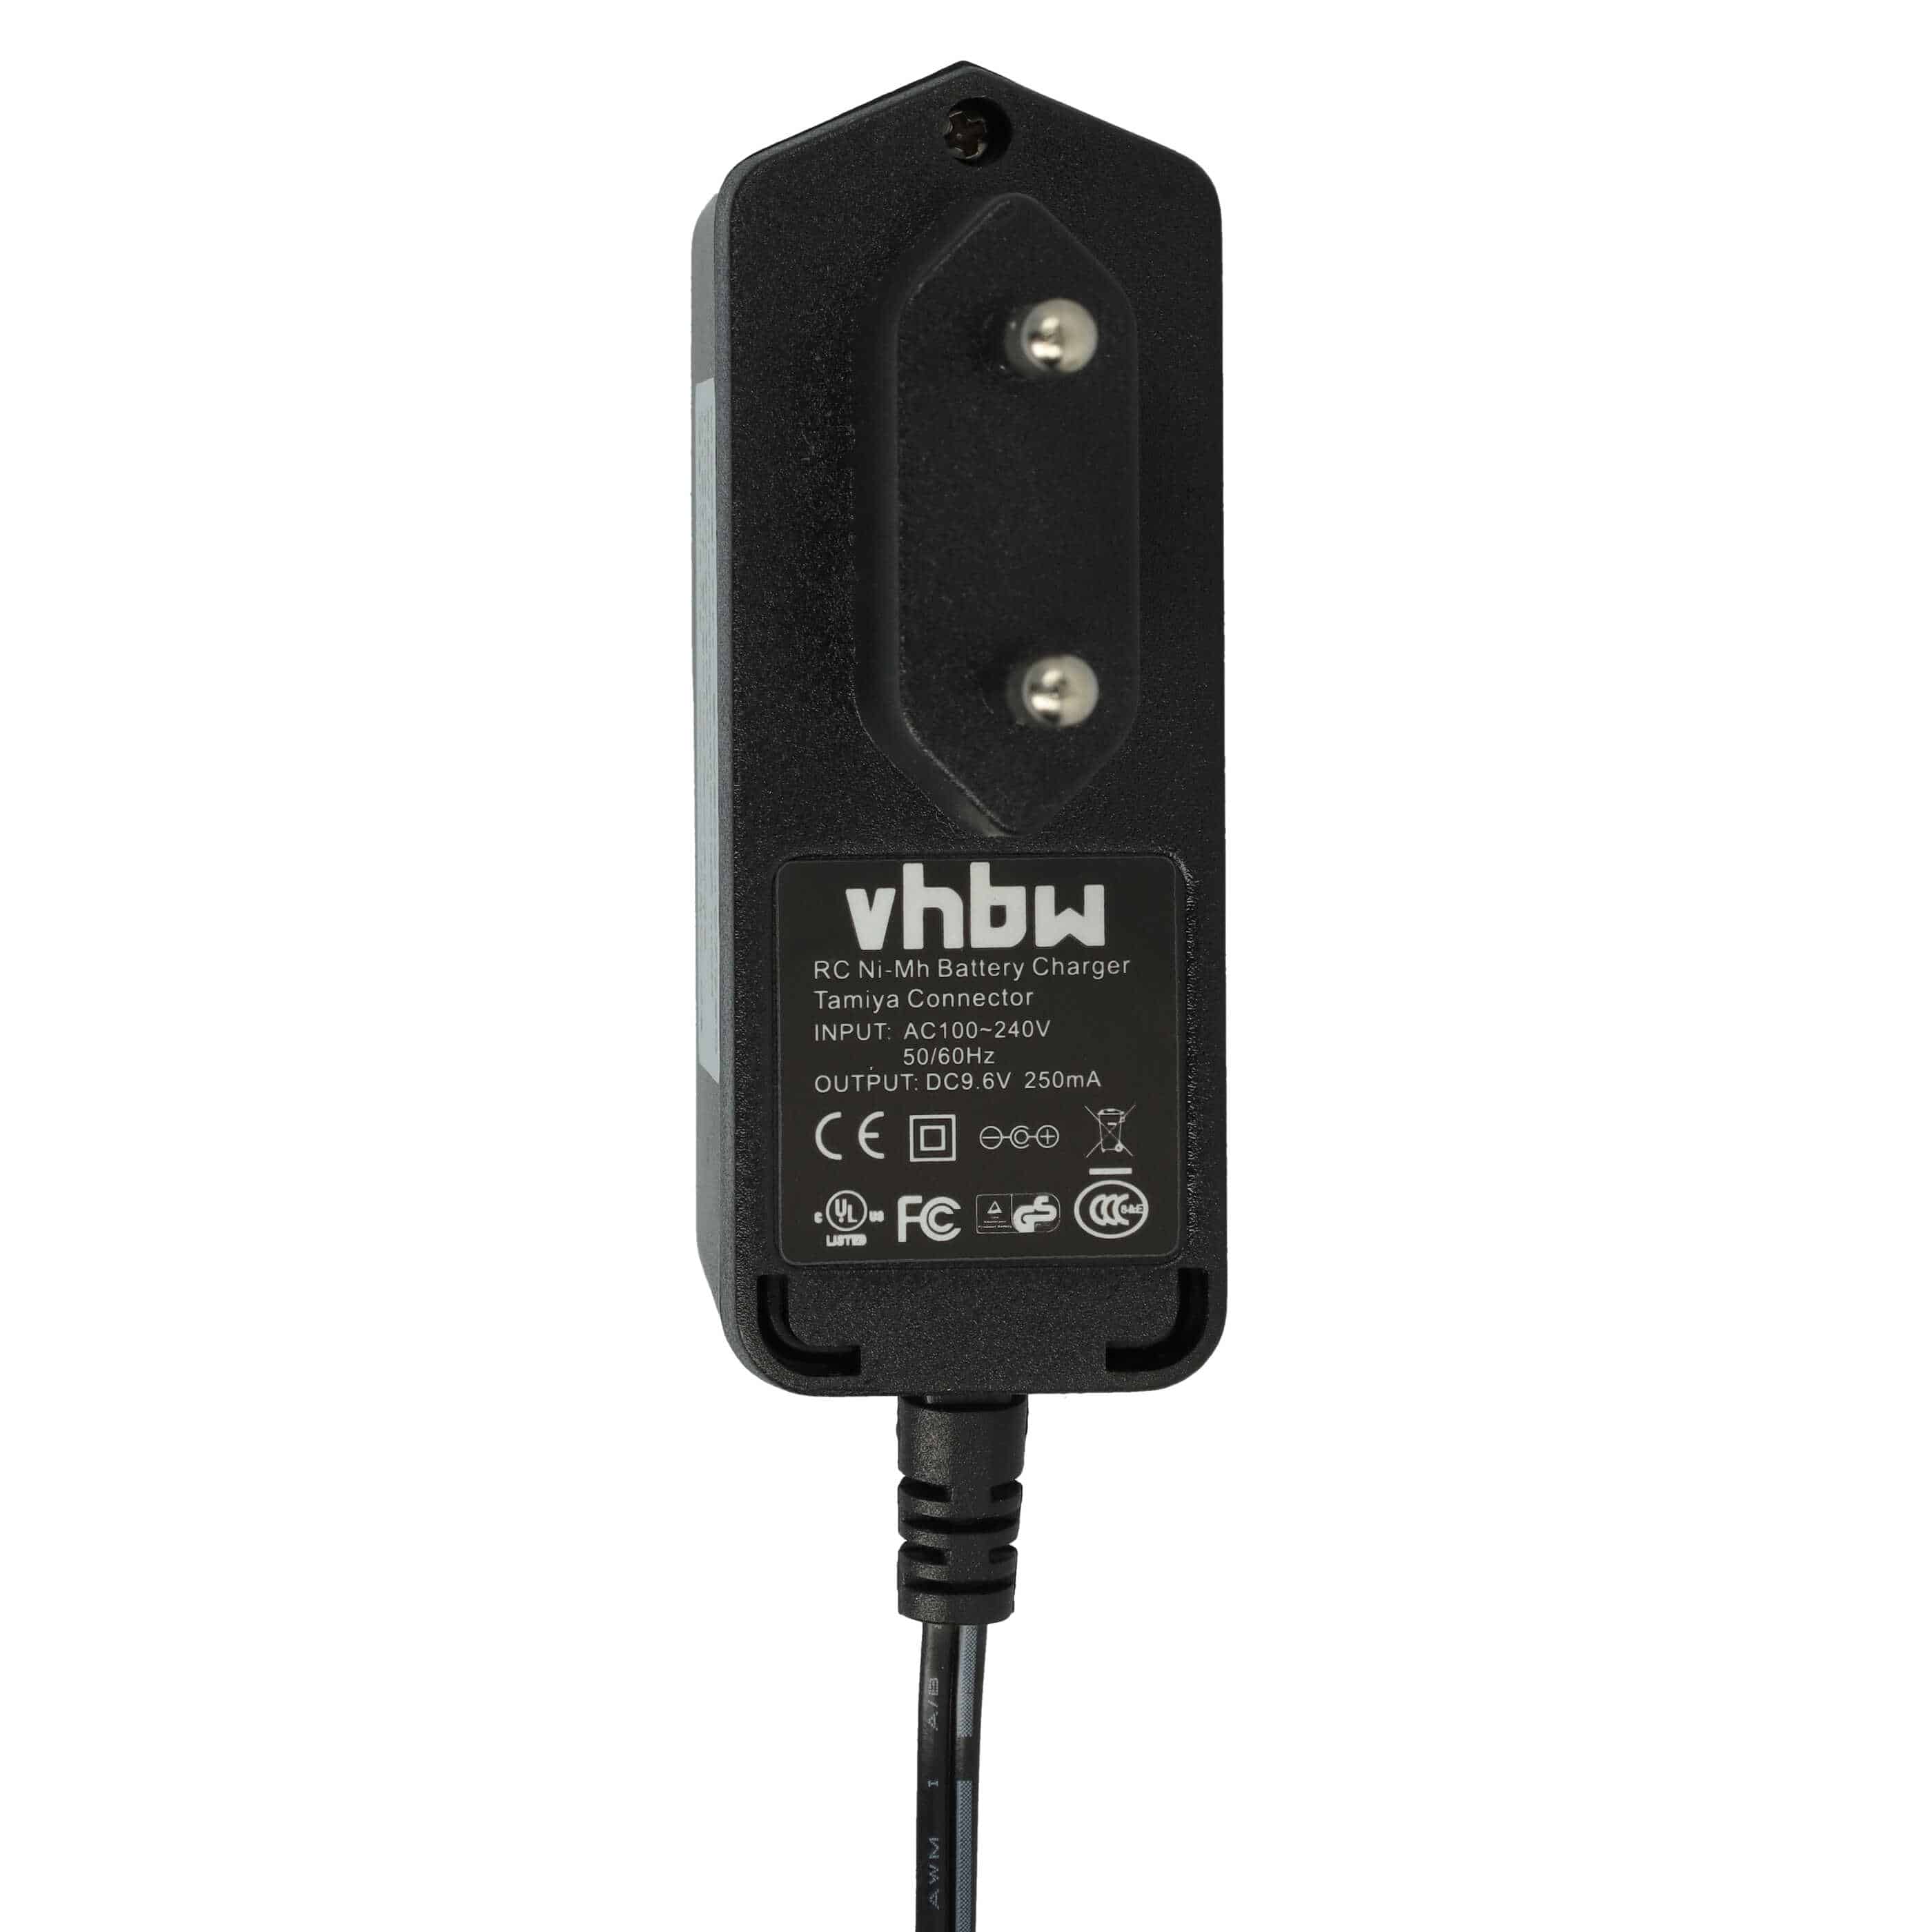 Chargeur pour batterie NiMH Tamiya Mini, modélisme RC - 200 cm 9,6 V / 0,25 A